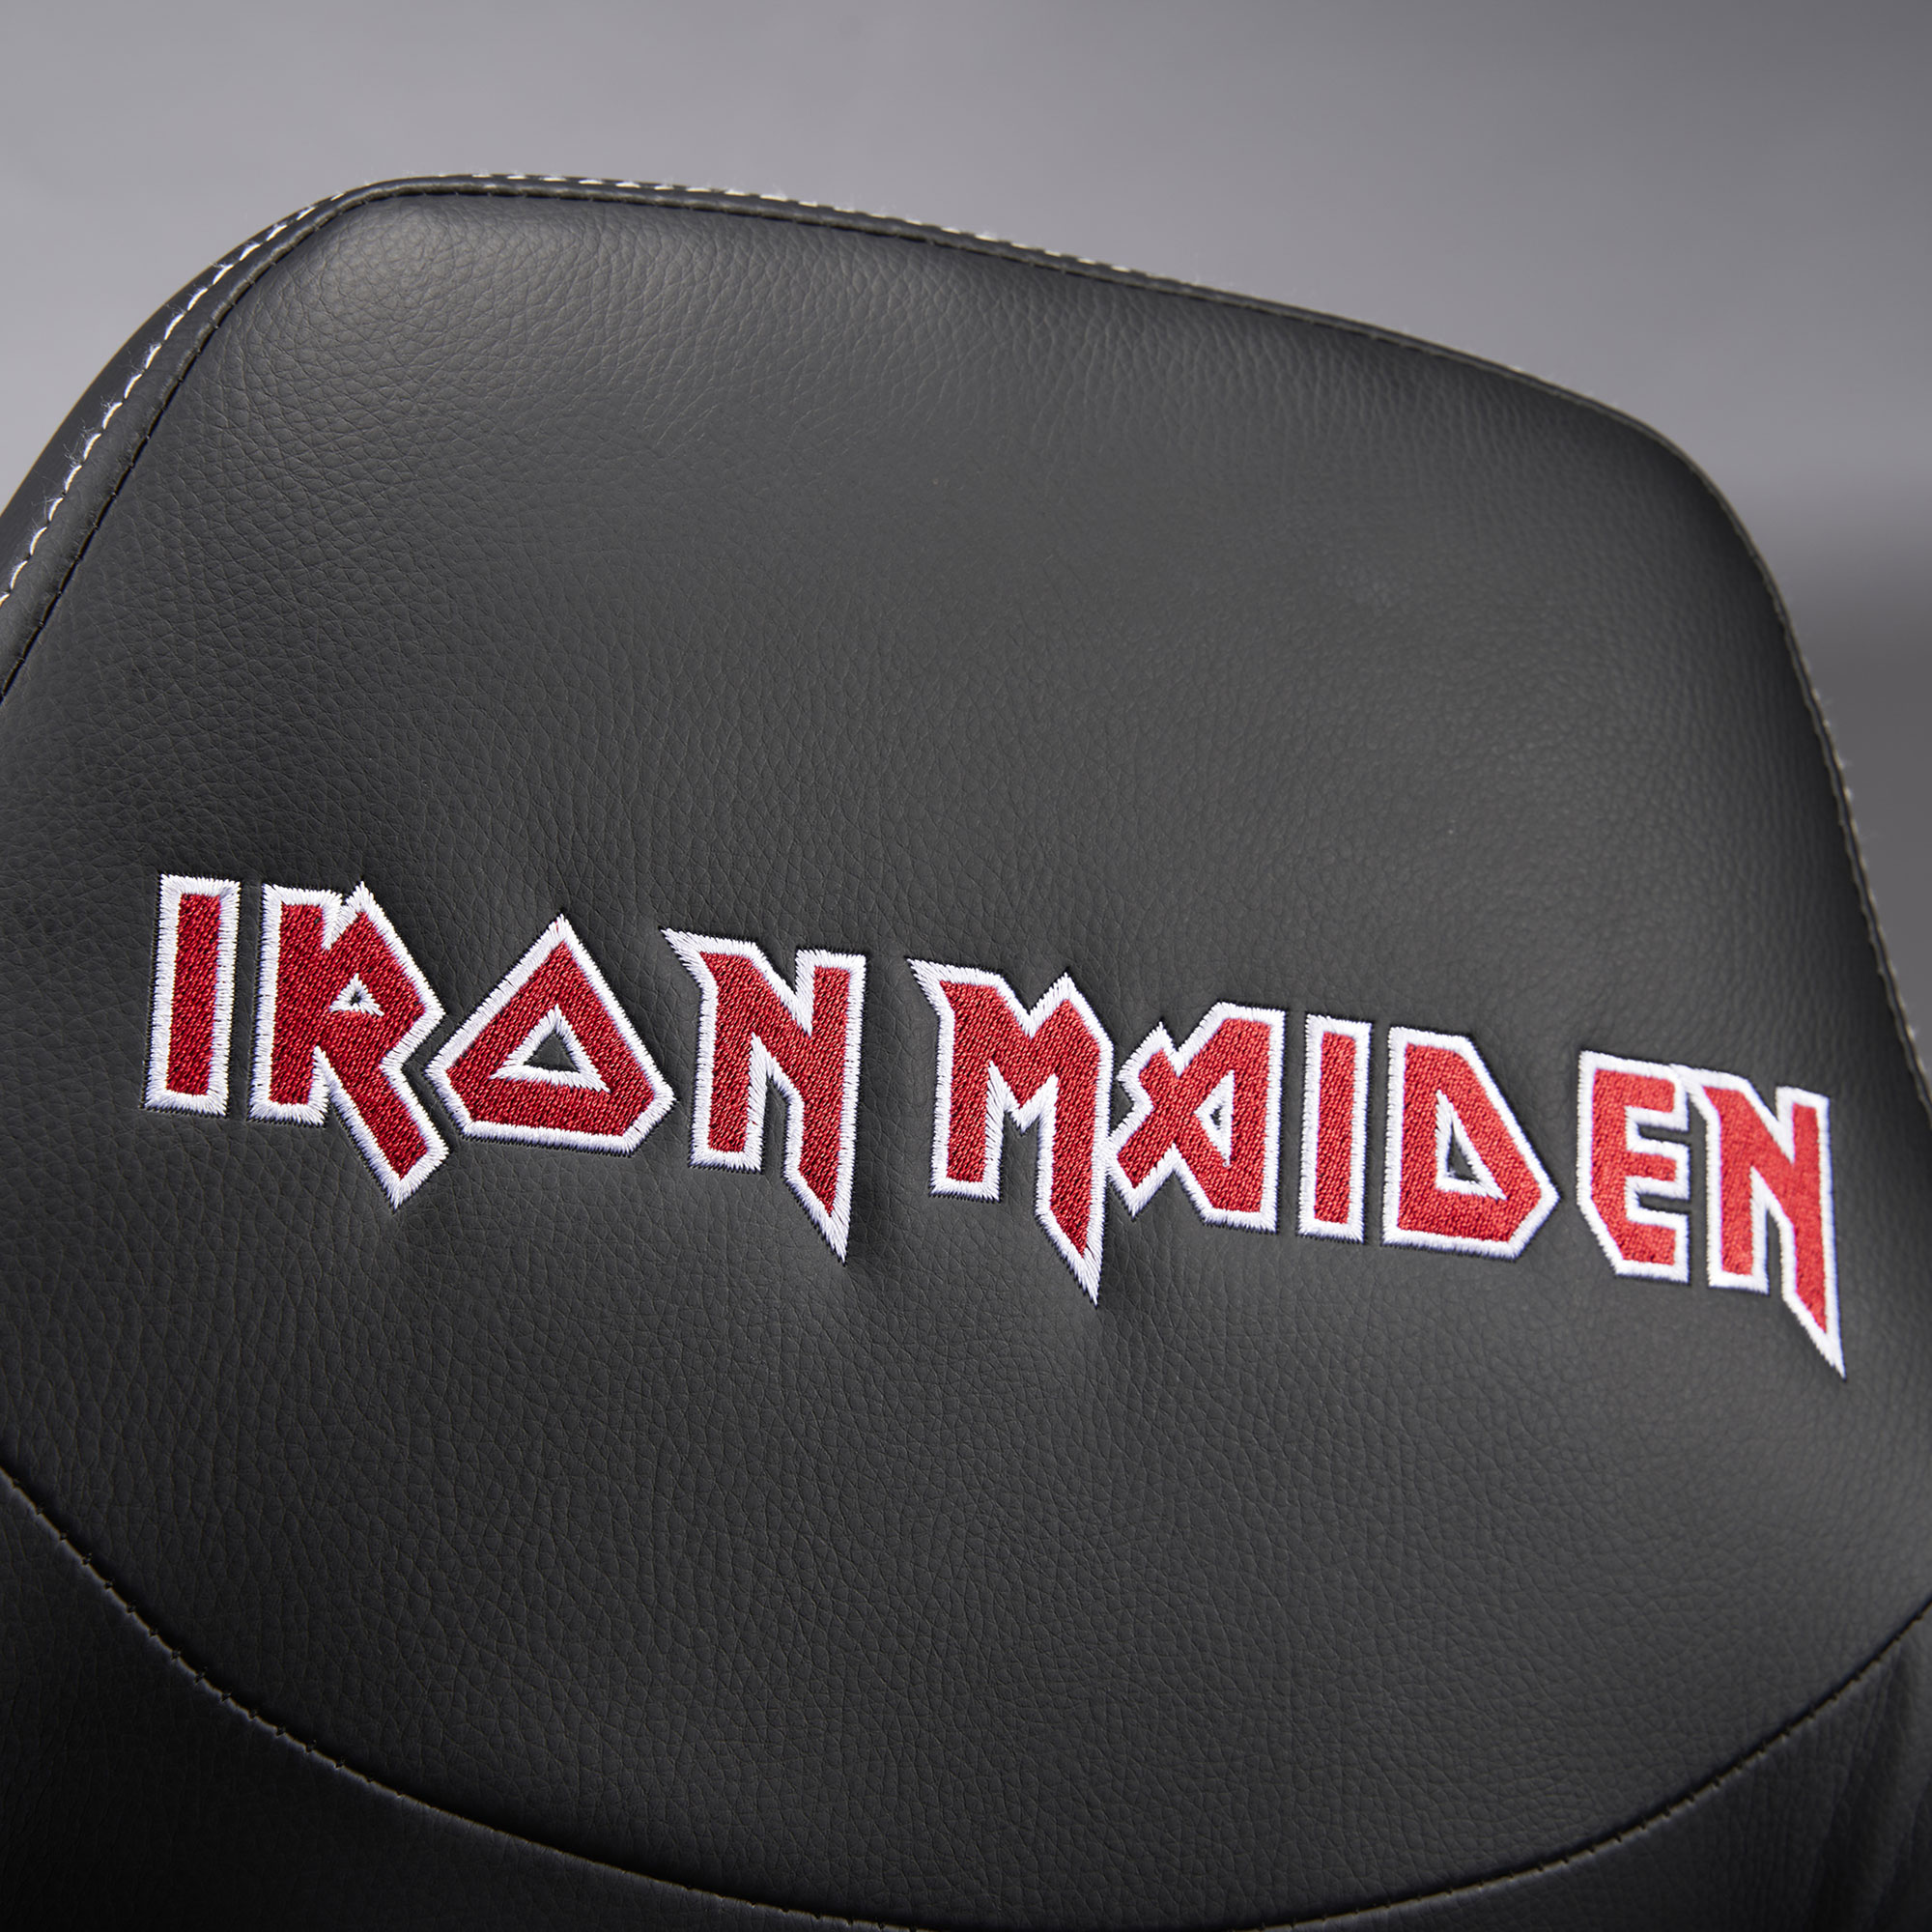 Office Chair Iron Maiden | Subsonic